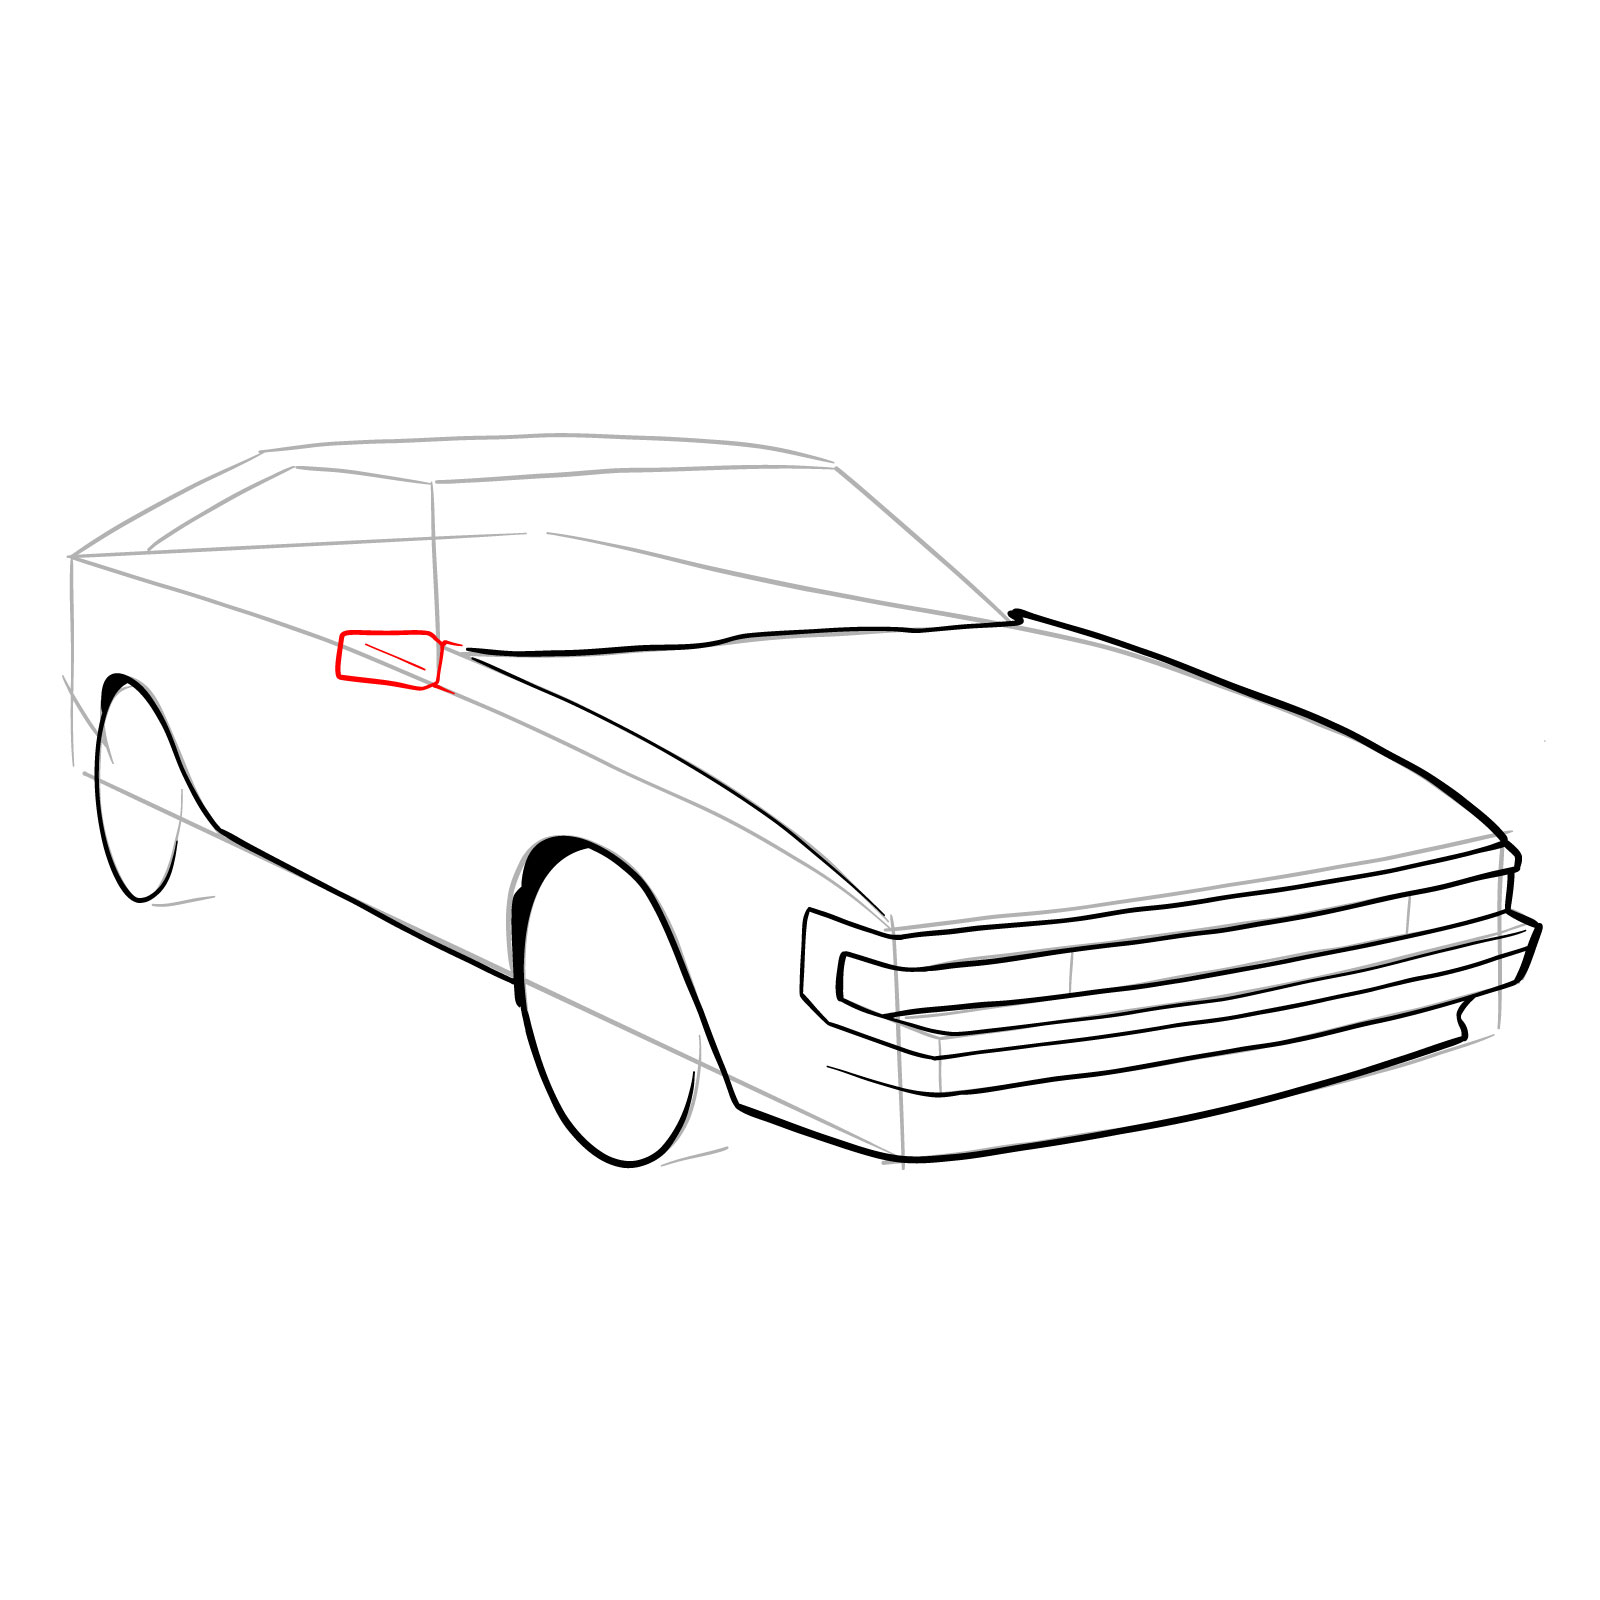 How to draw a 1985 Toyota Celica Supra P Type MK 2 - step 14